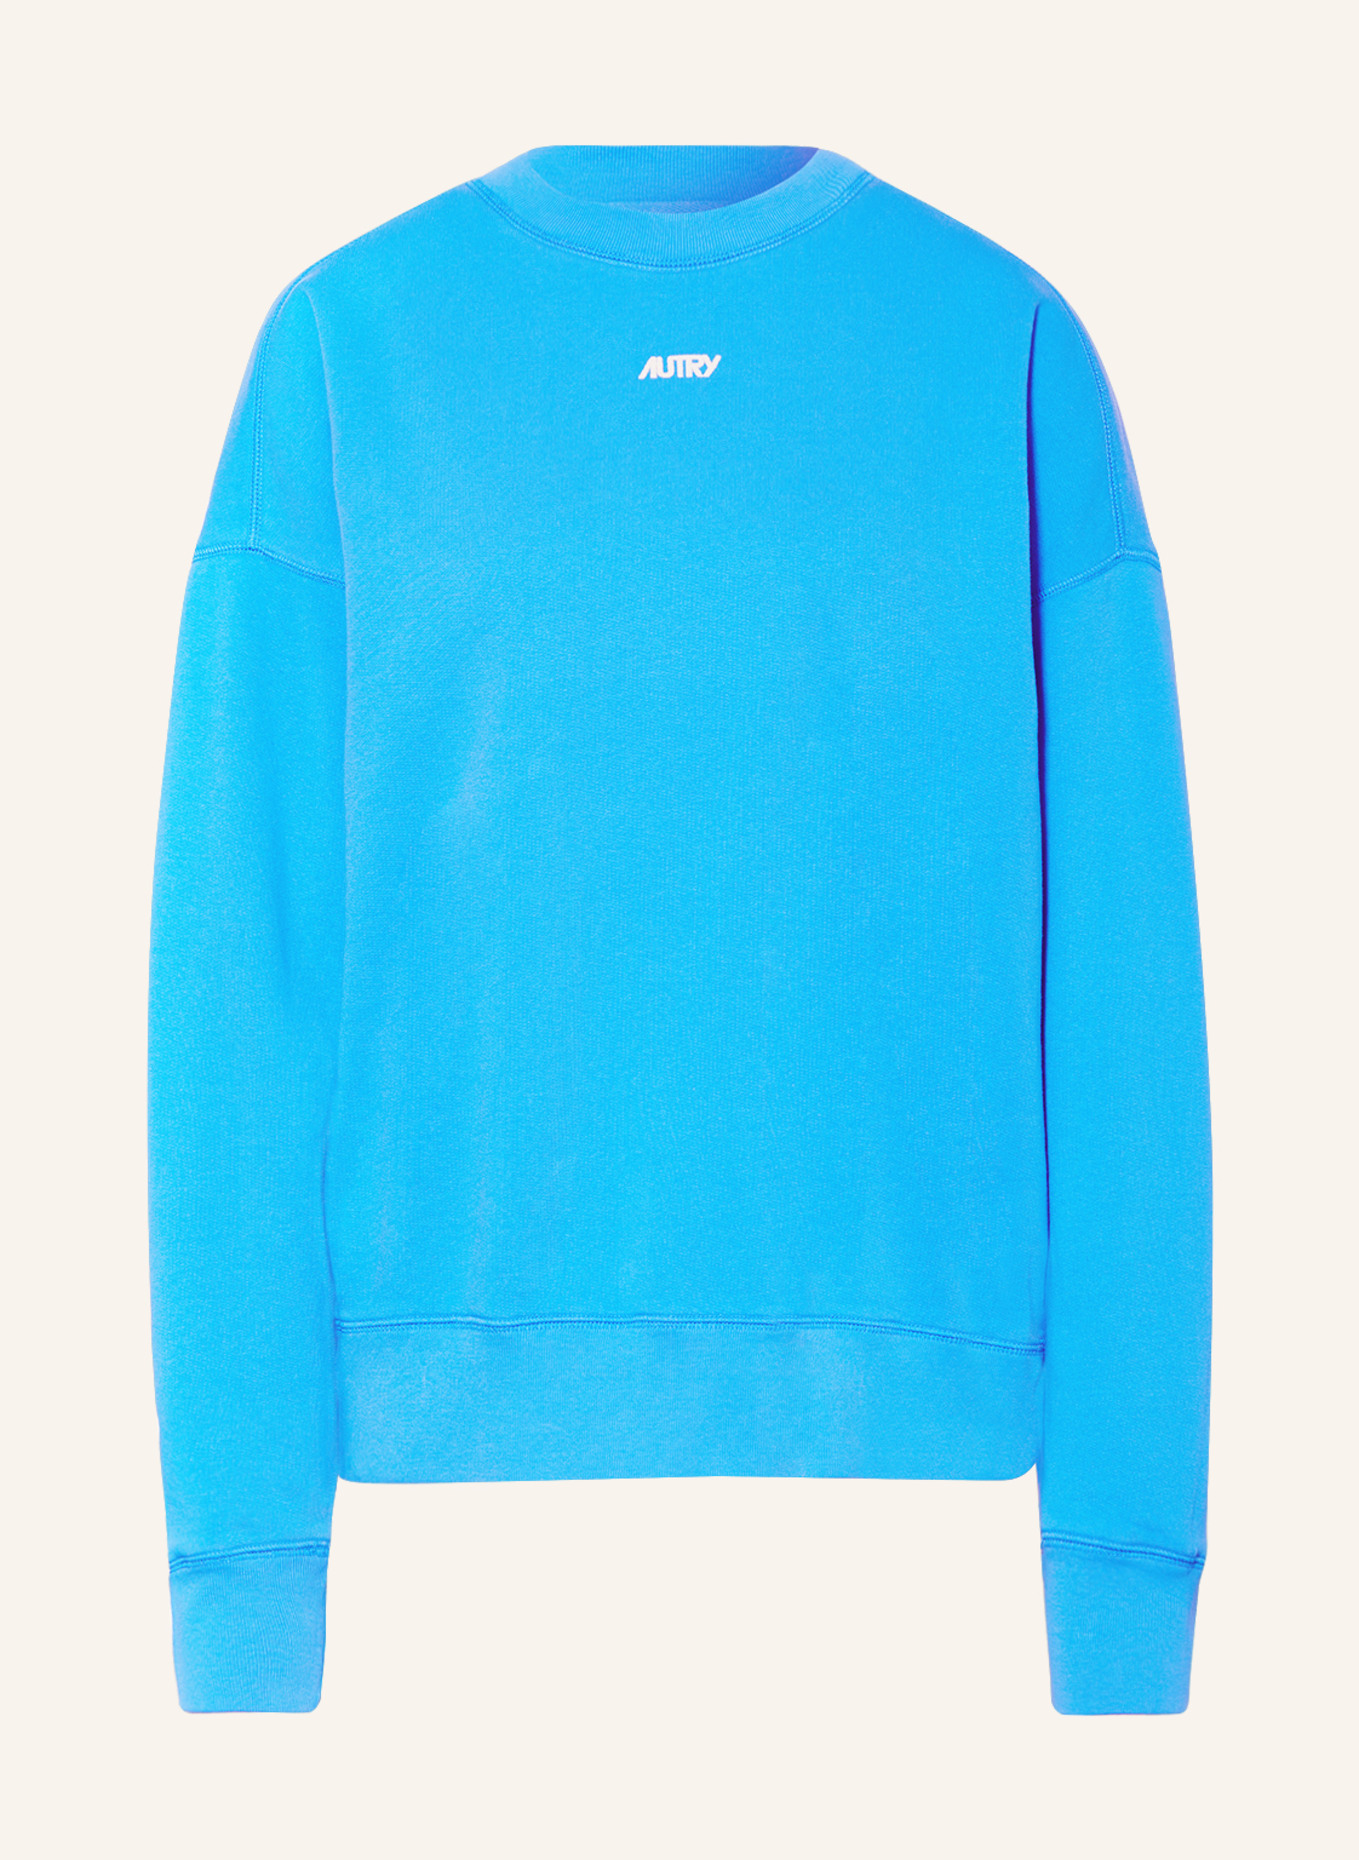 AUTRY Sweatshirt, Farbe: NEONBLAU (Bild 1)